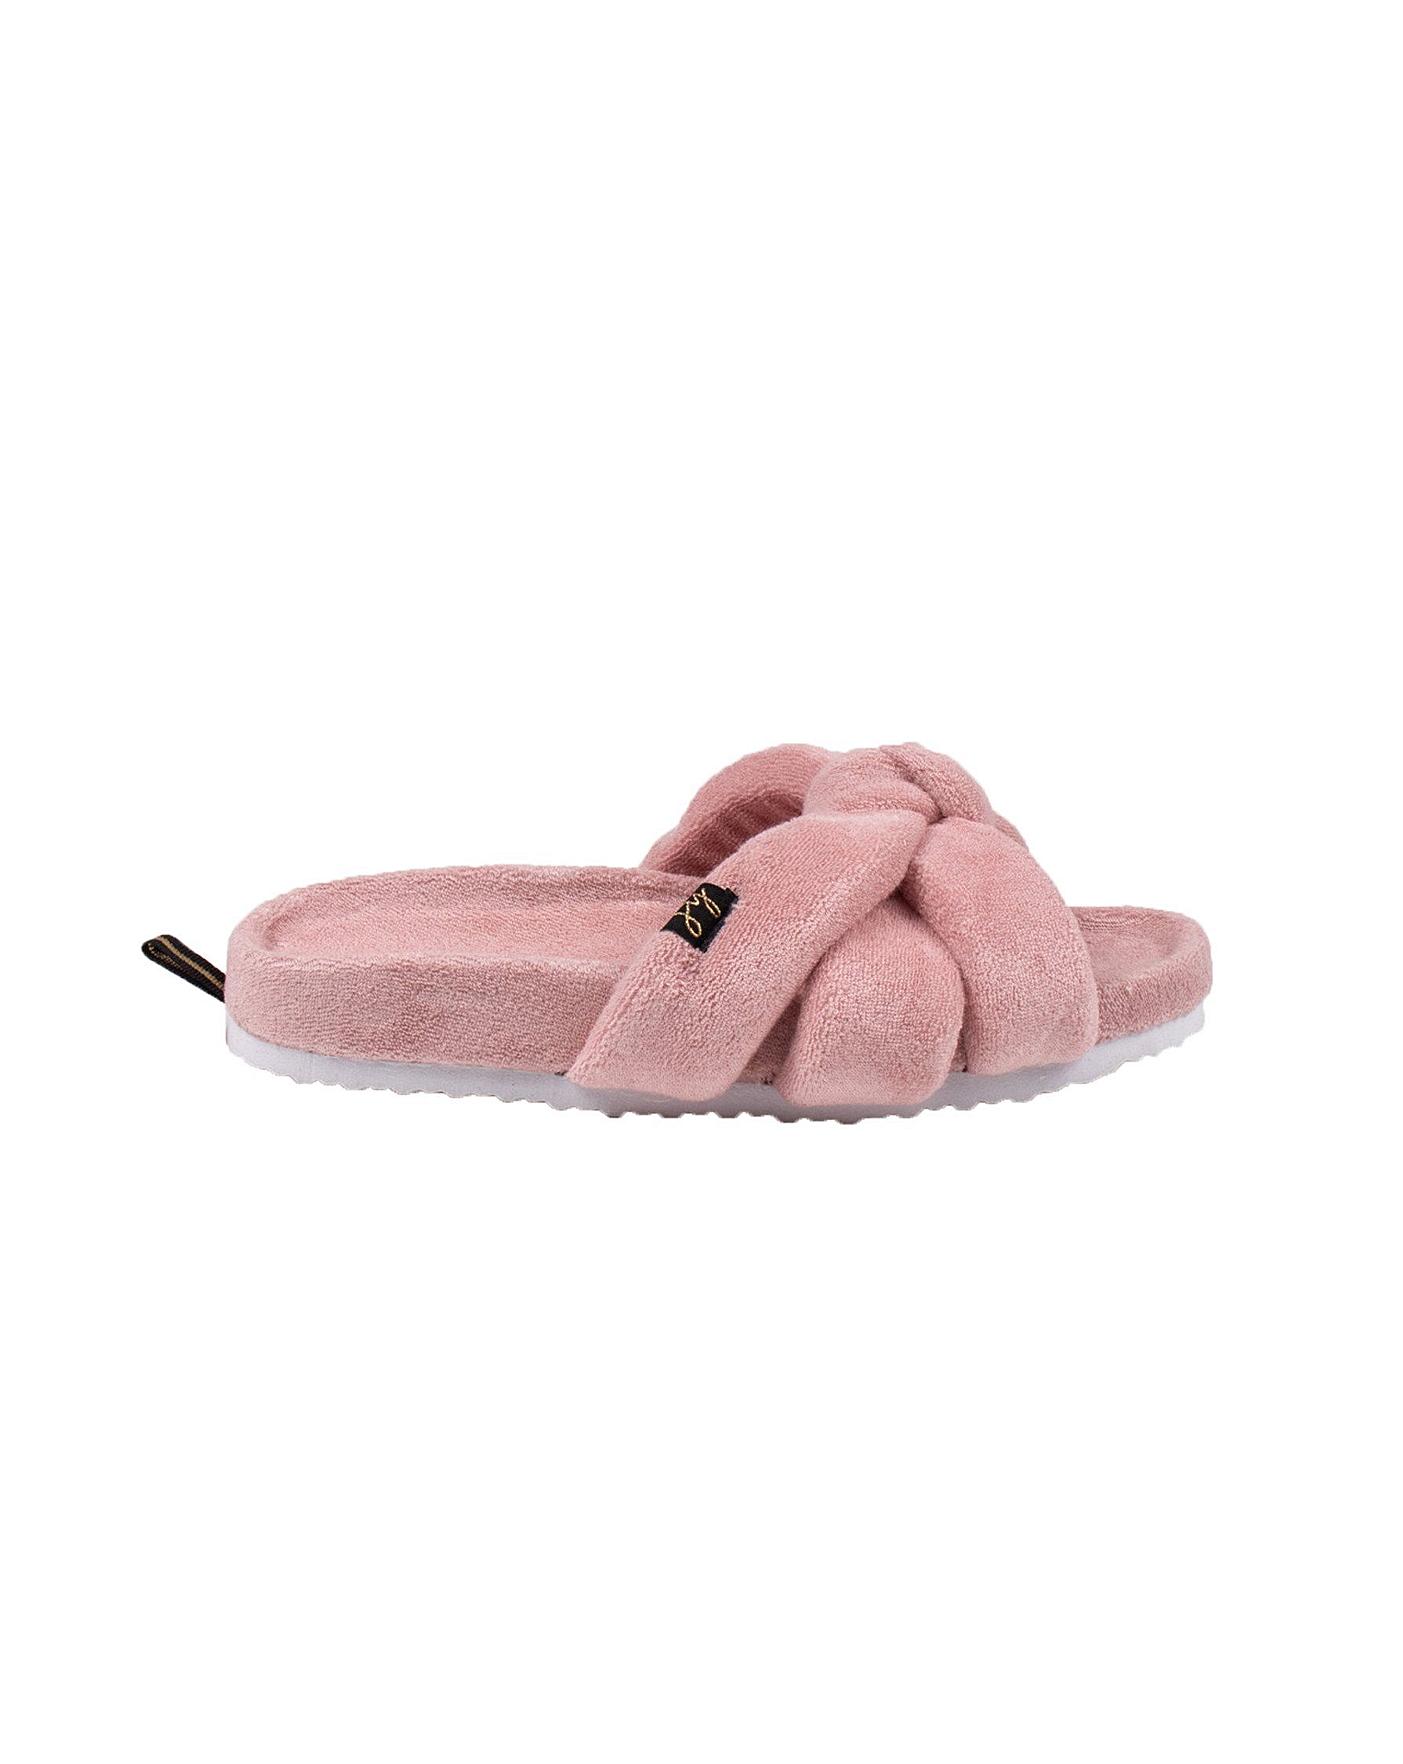 ariel slippers